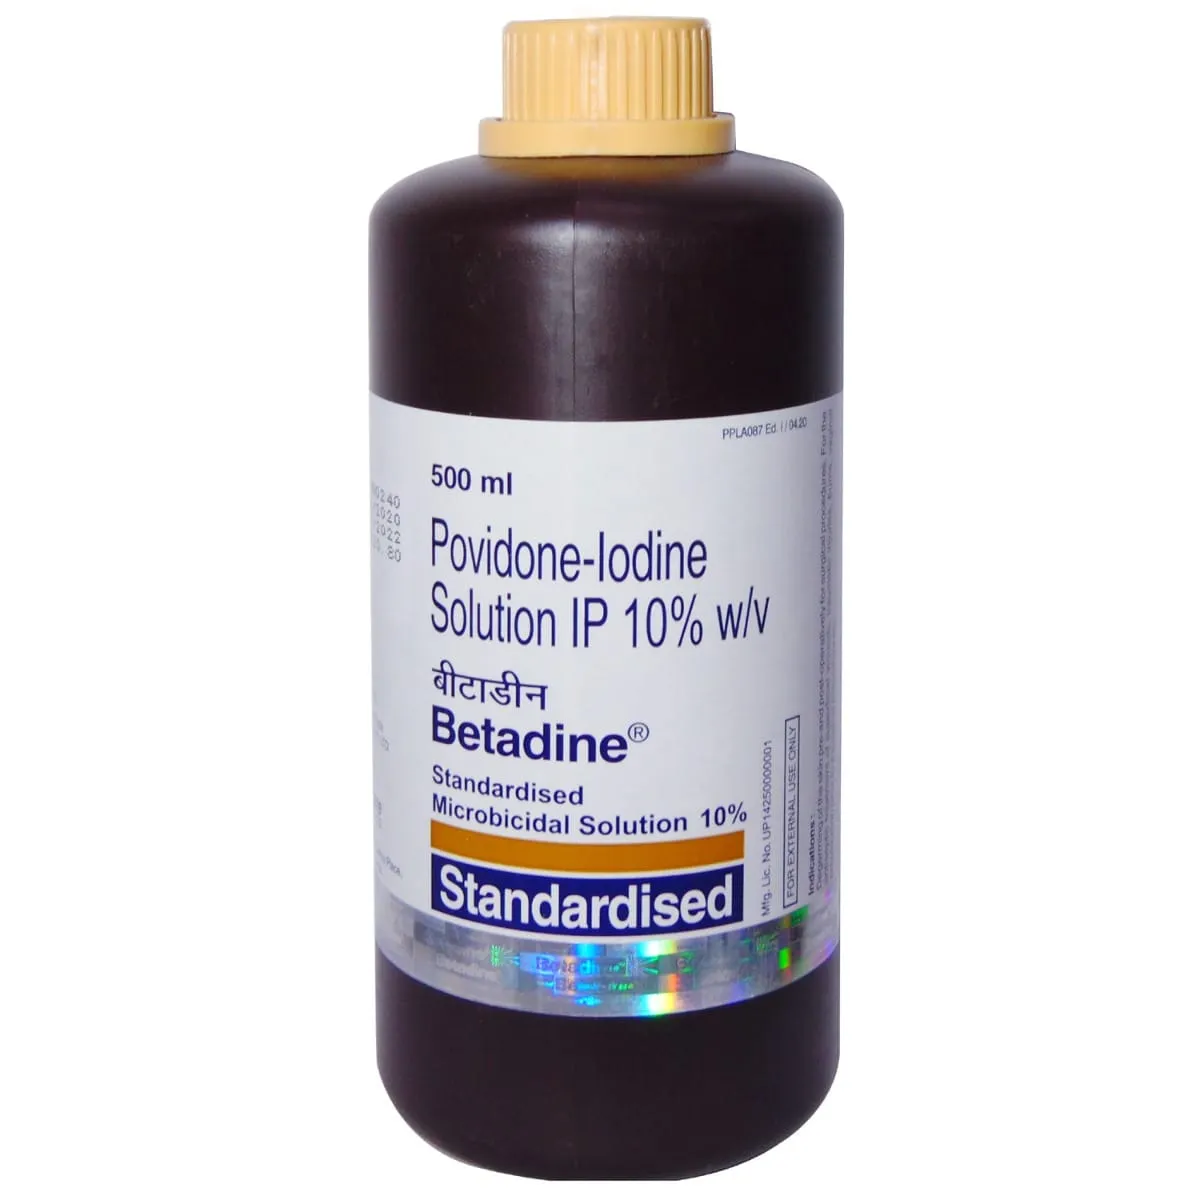 Betadine 10% Solution